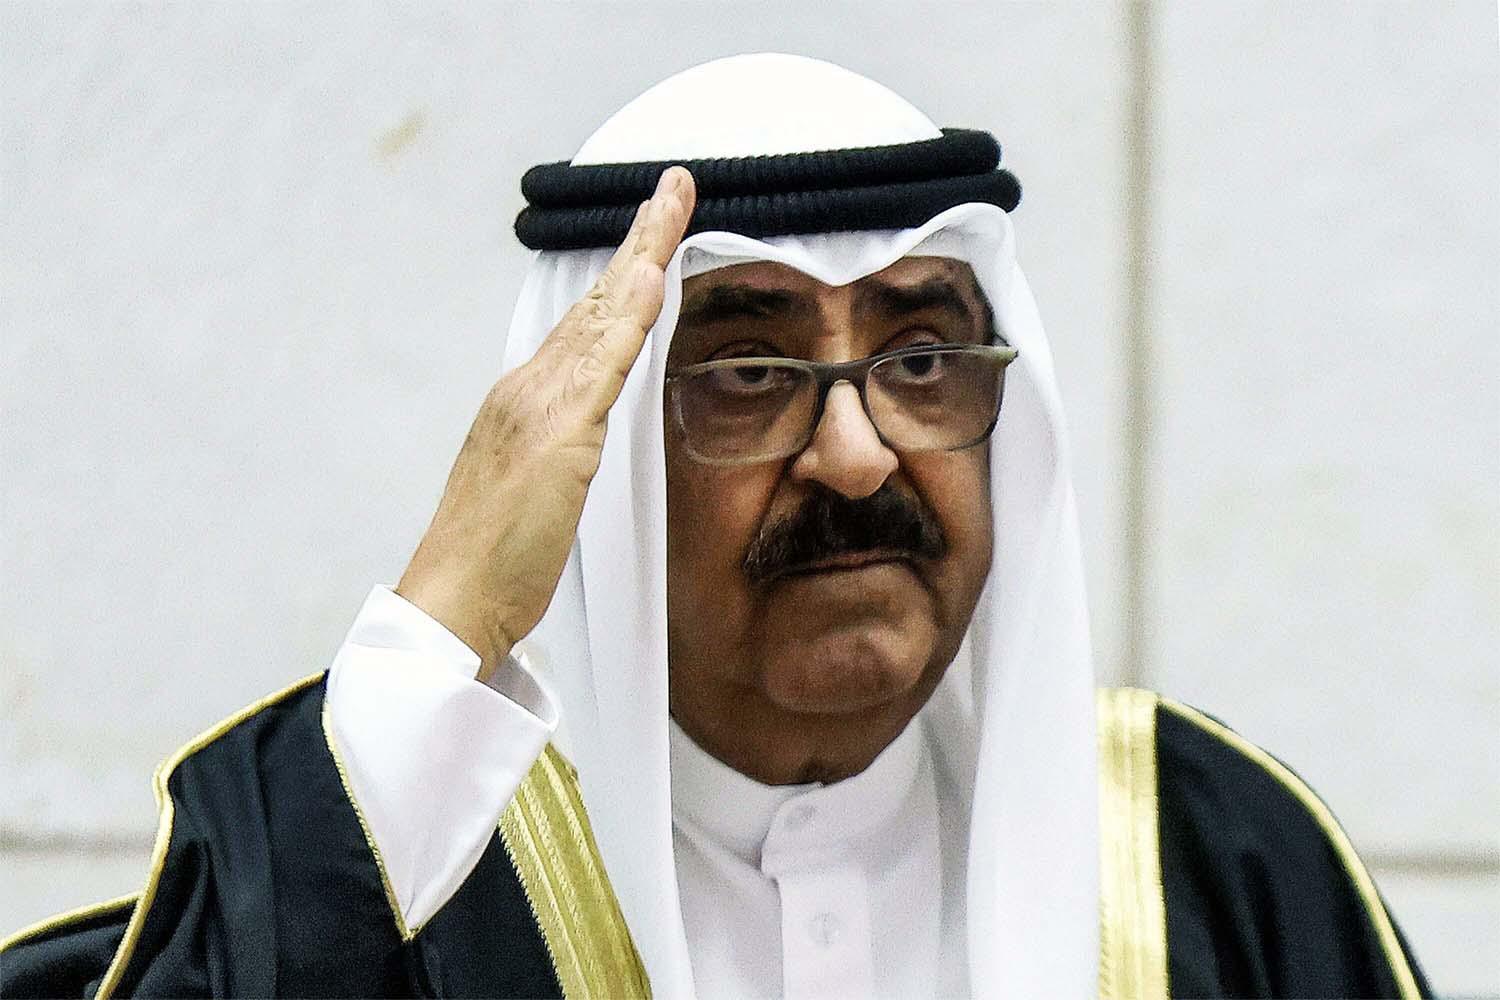 Kuwait's new Emir Sheikh Meshal al-Ahmad al-Sabah 